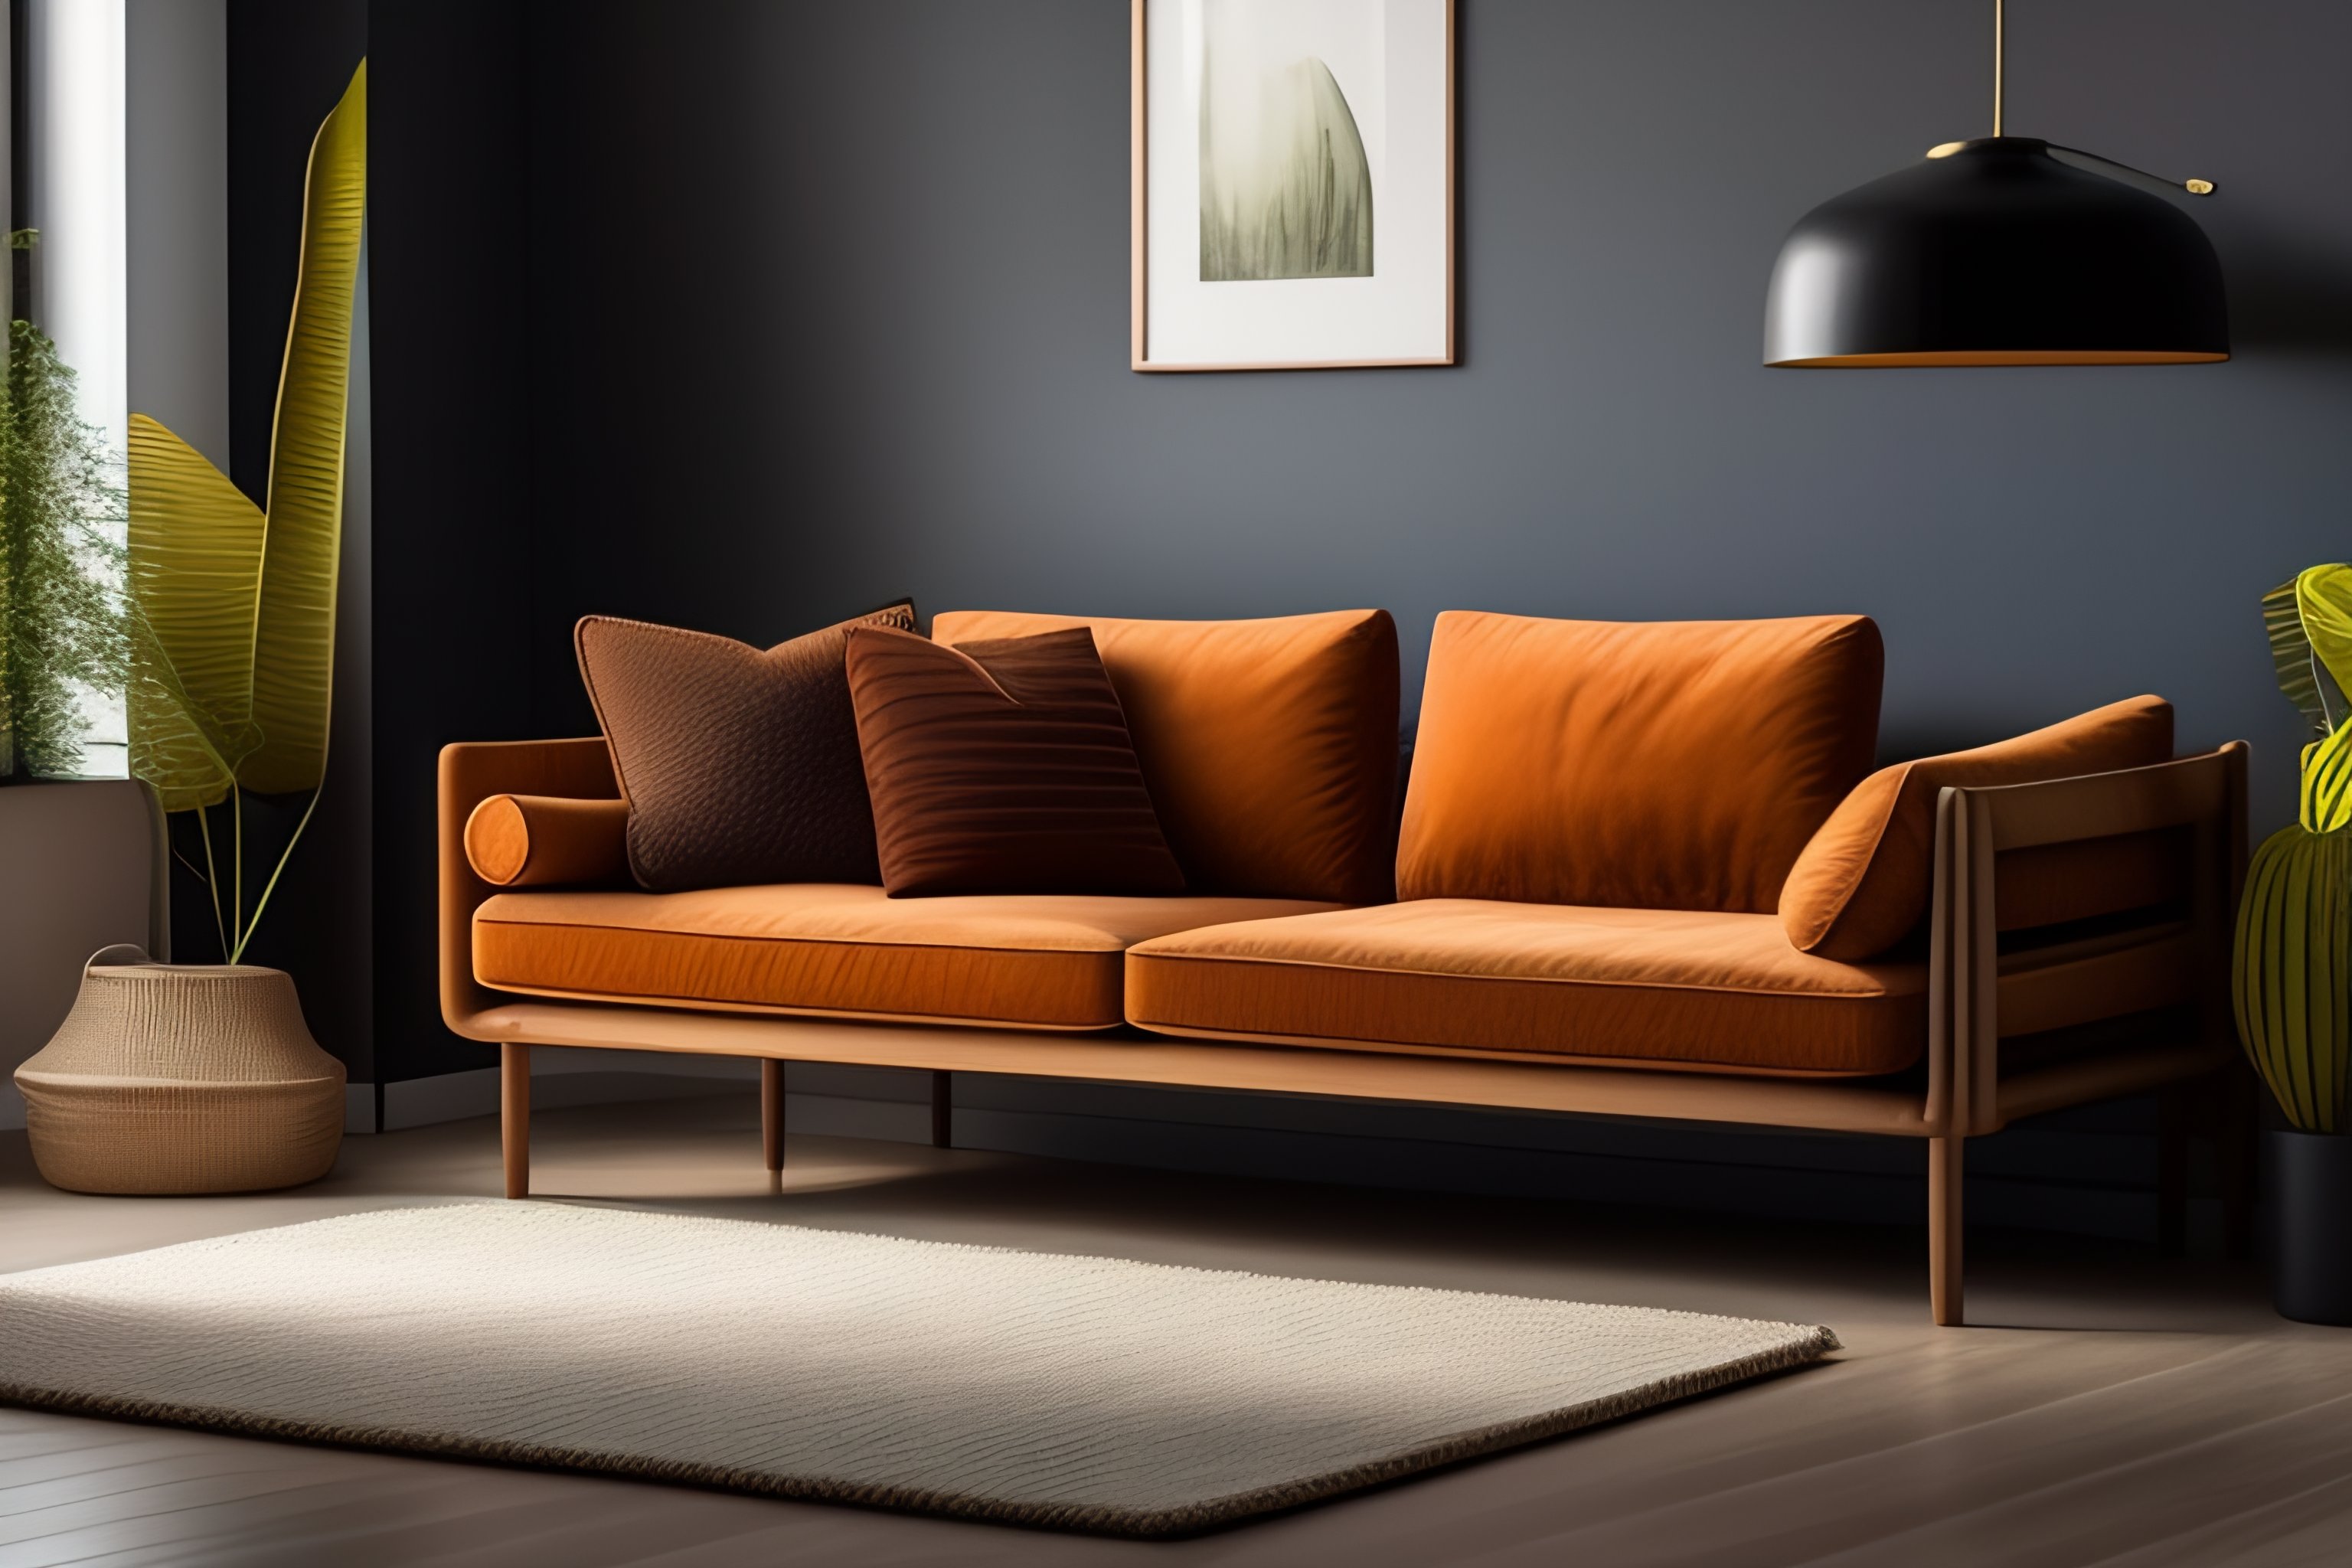 Lexica Wooden Sofa Square Cushions Studio Lighting Scandinavian Design Minimalist